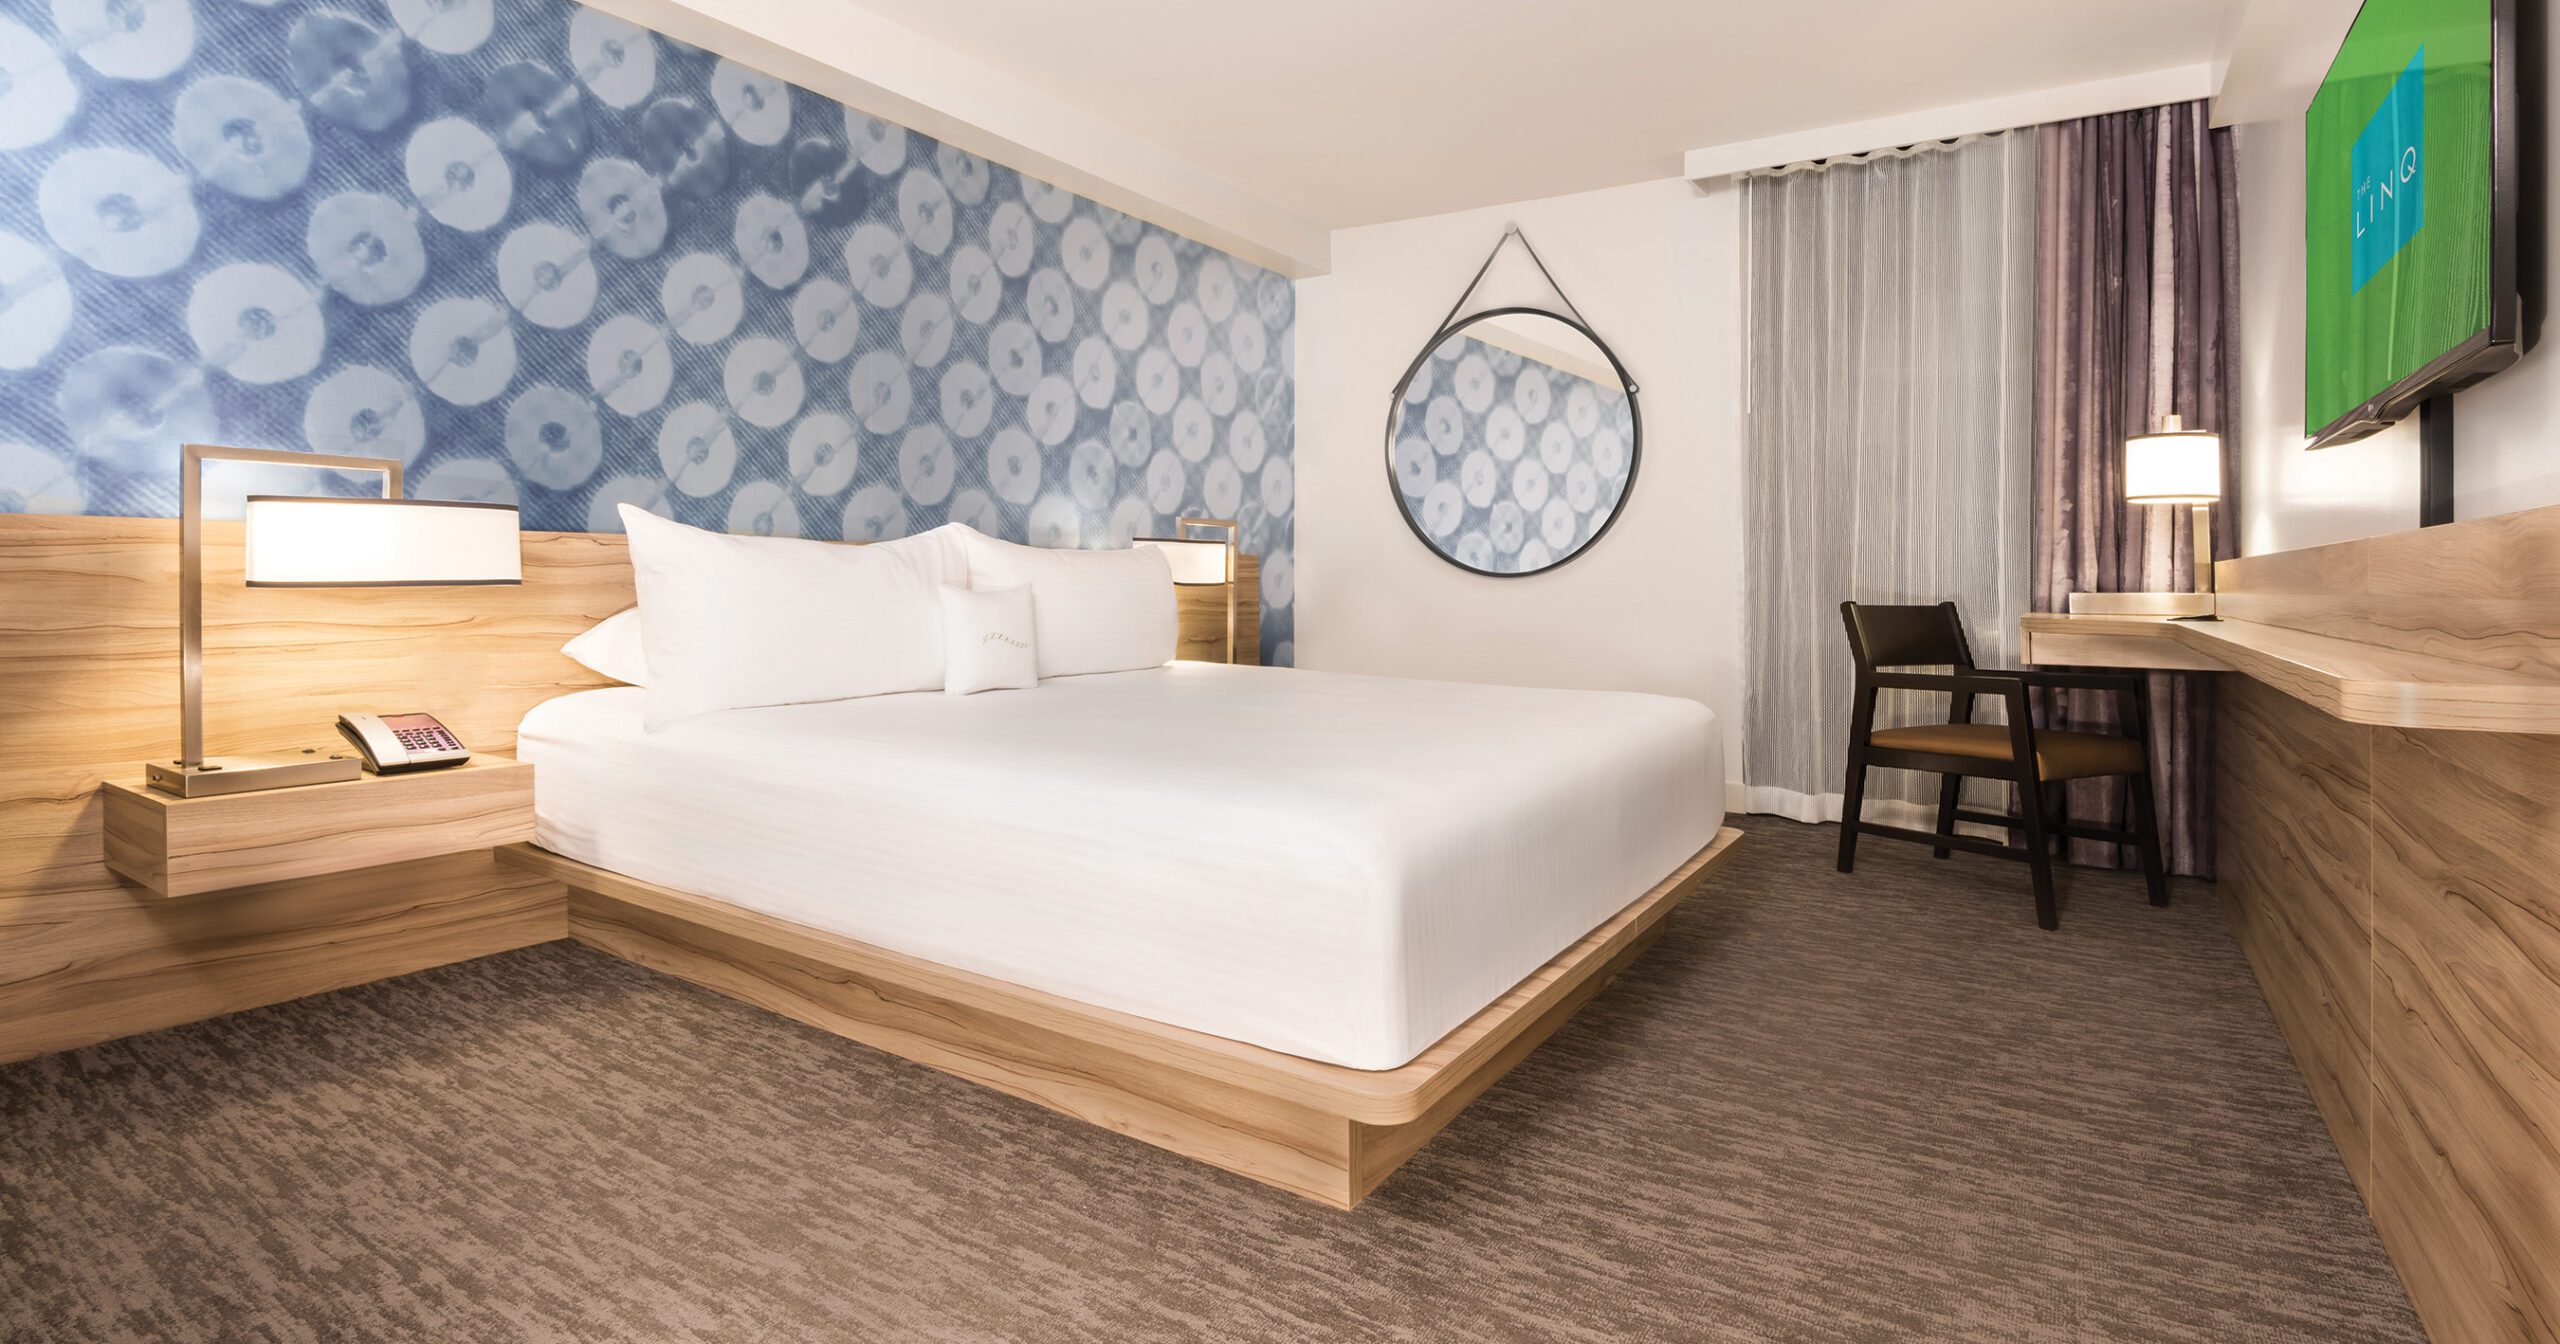 LINQ room Las Vegas hotels